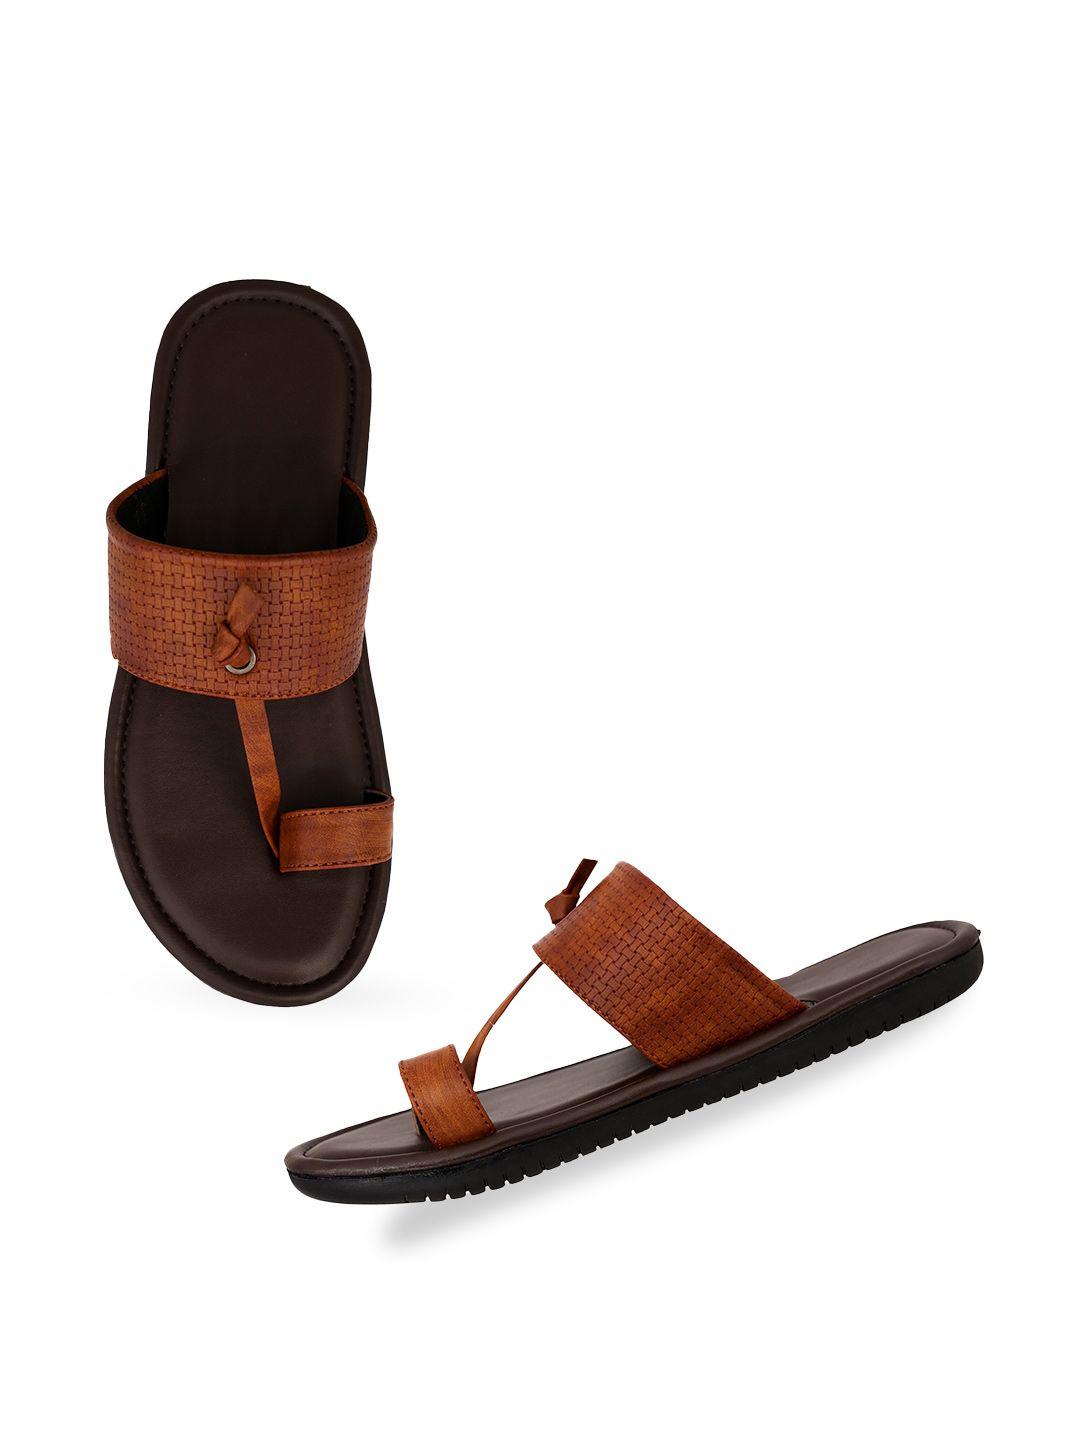 aristitch men textured leather comfort sandals